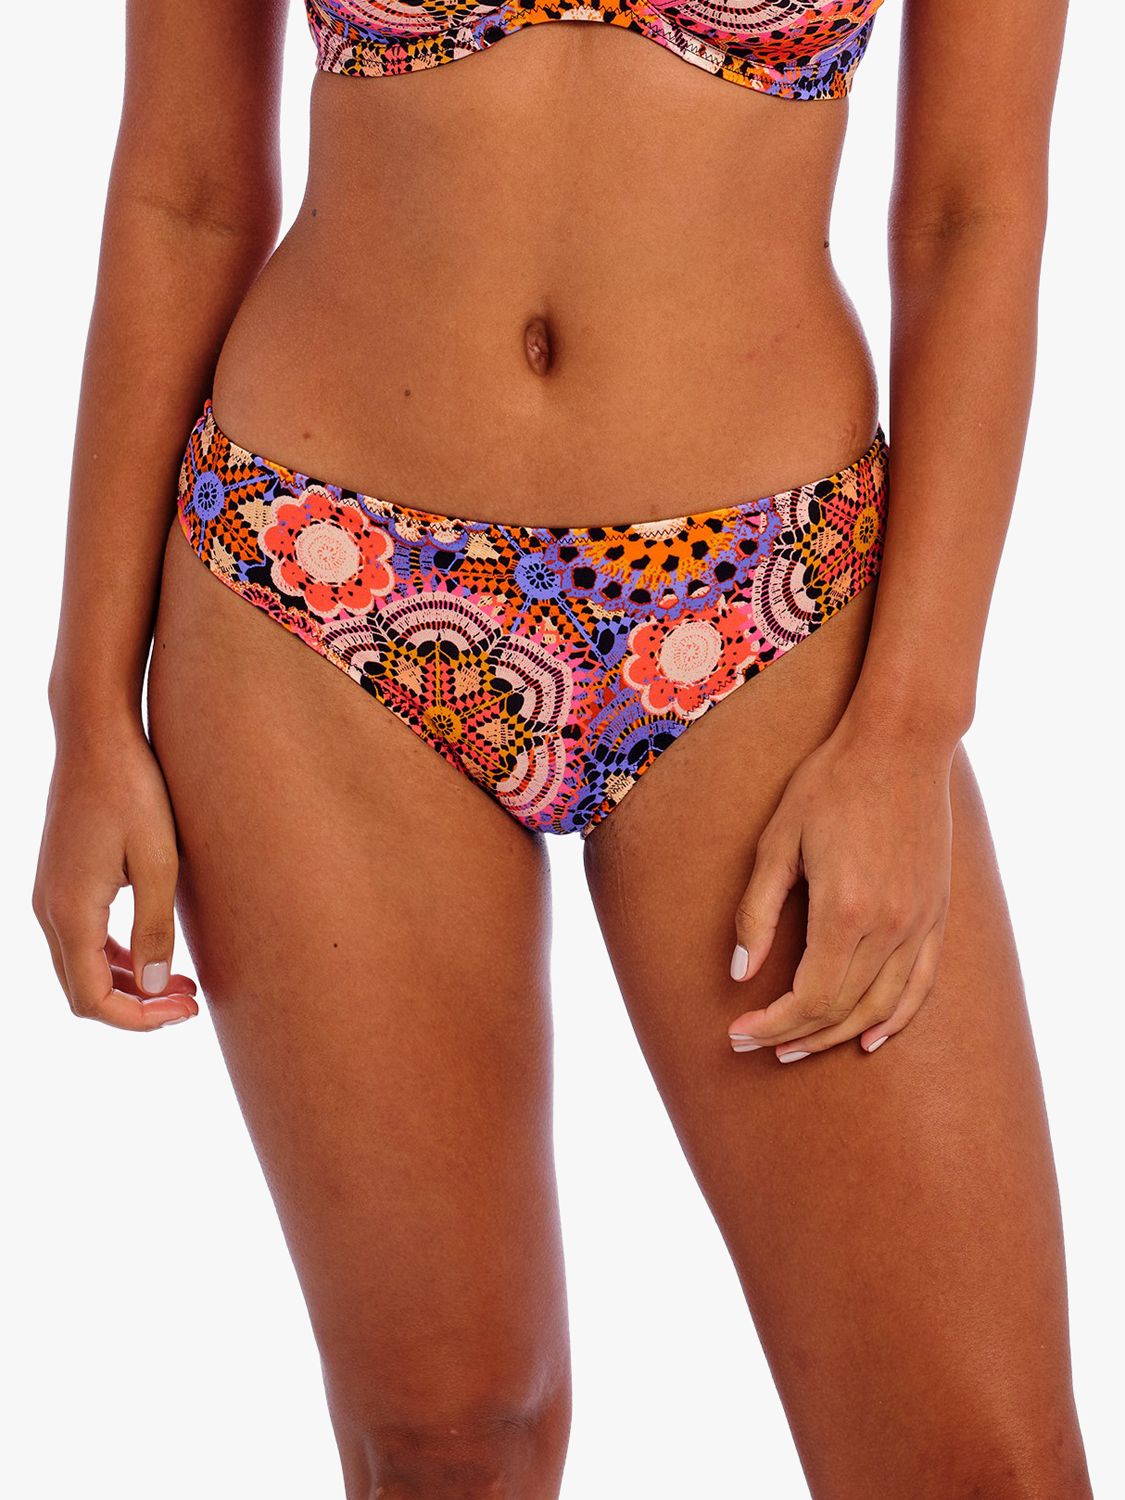 Freya San Tiago Nights Crochet Print Bikini Bottoms, Multi, XL